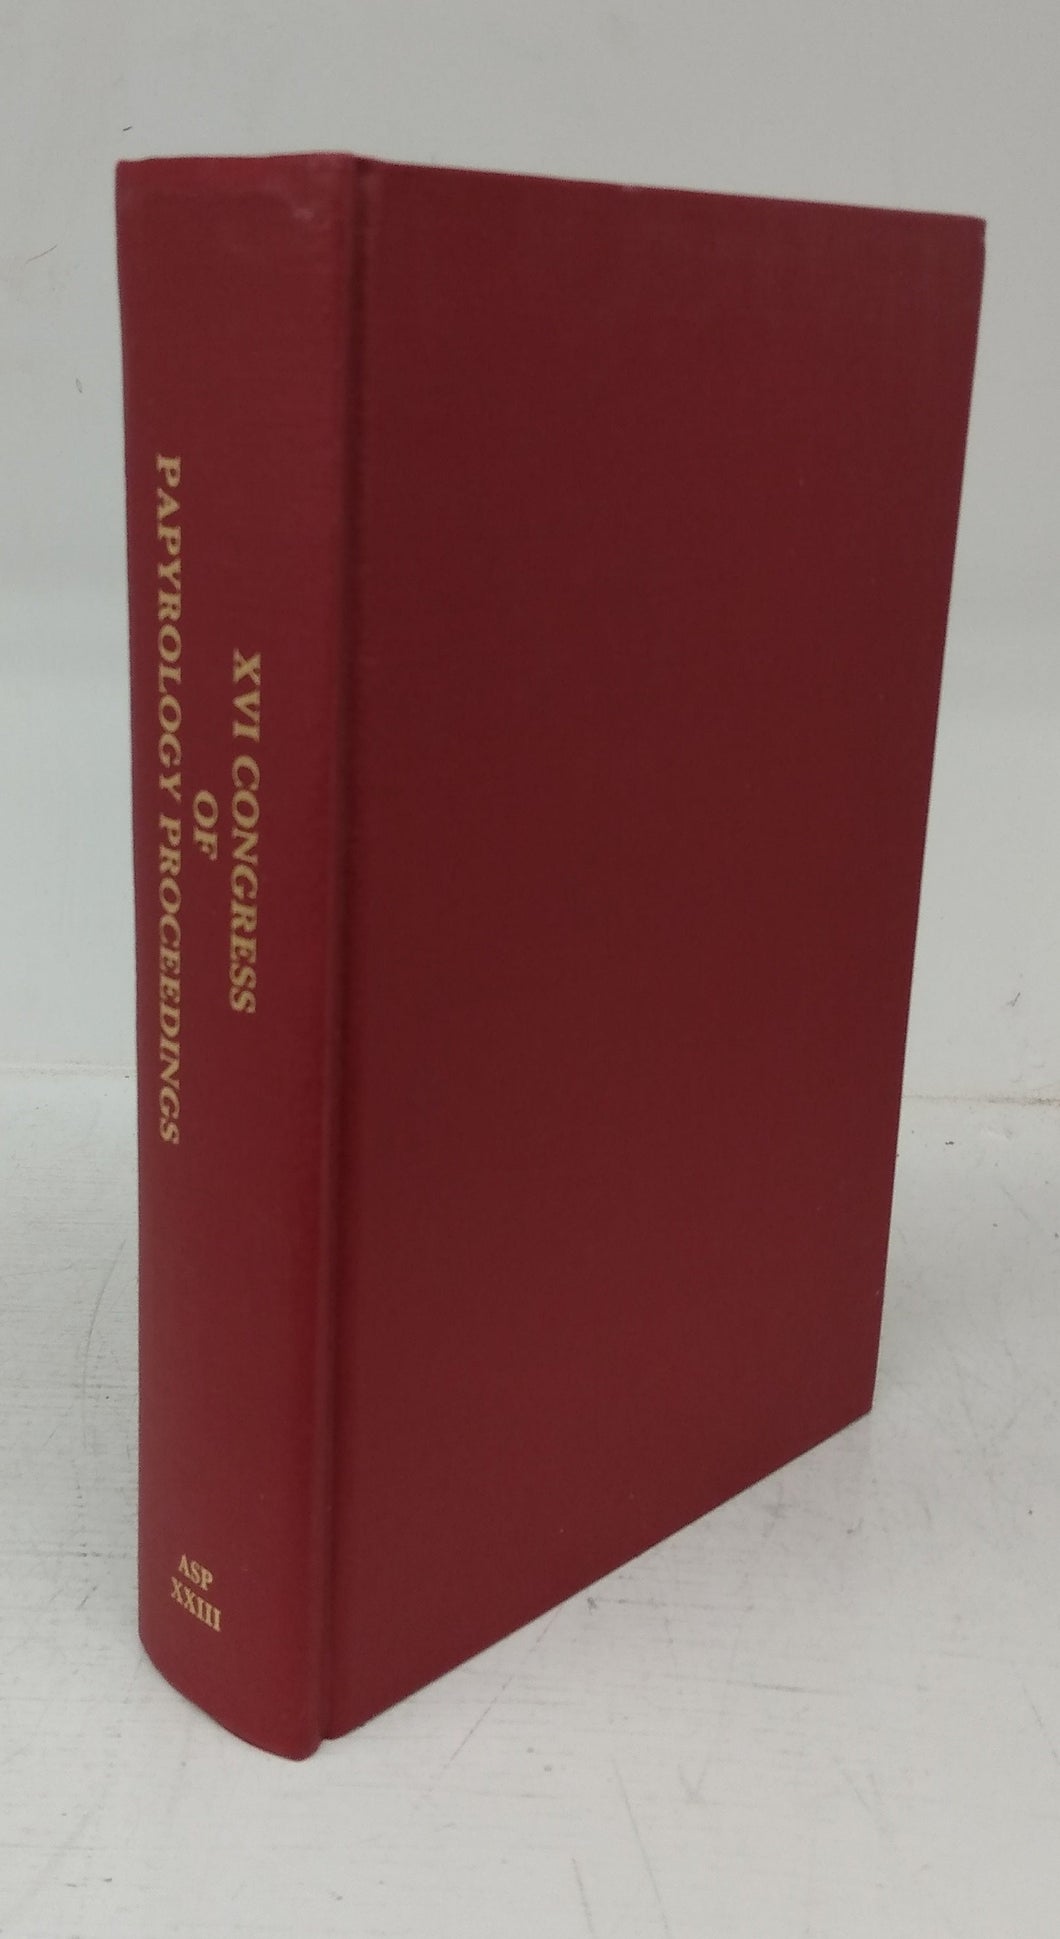 Proceedings of the Sixteenth International Congress of Papyrology, New York, 24-31 July 1980